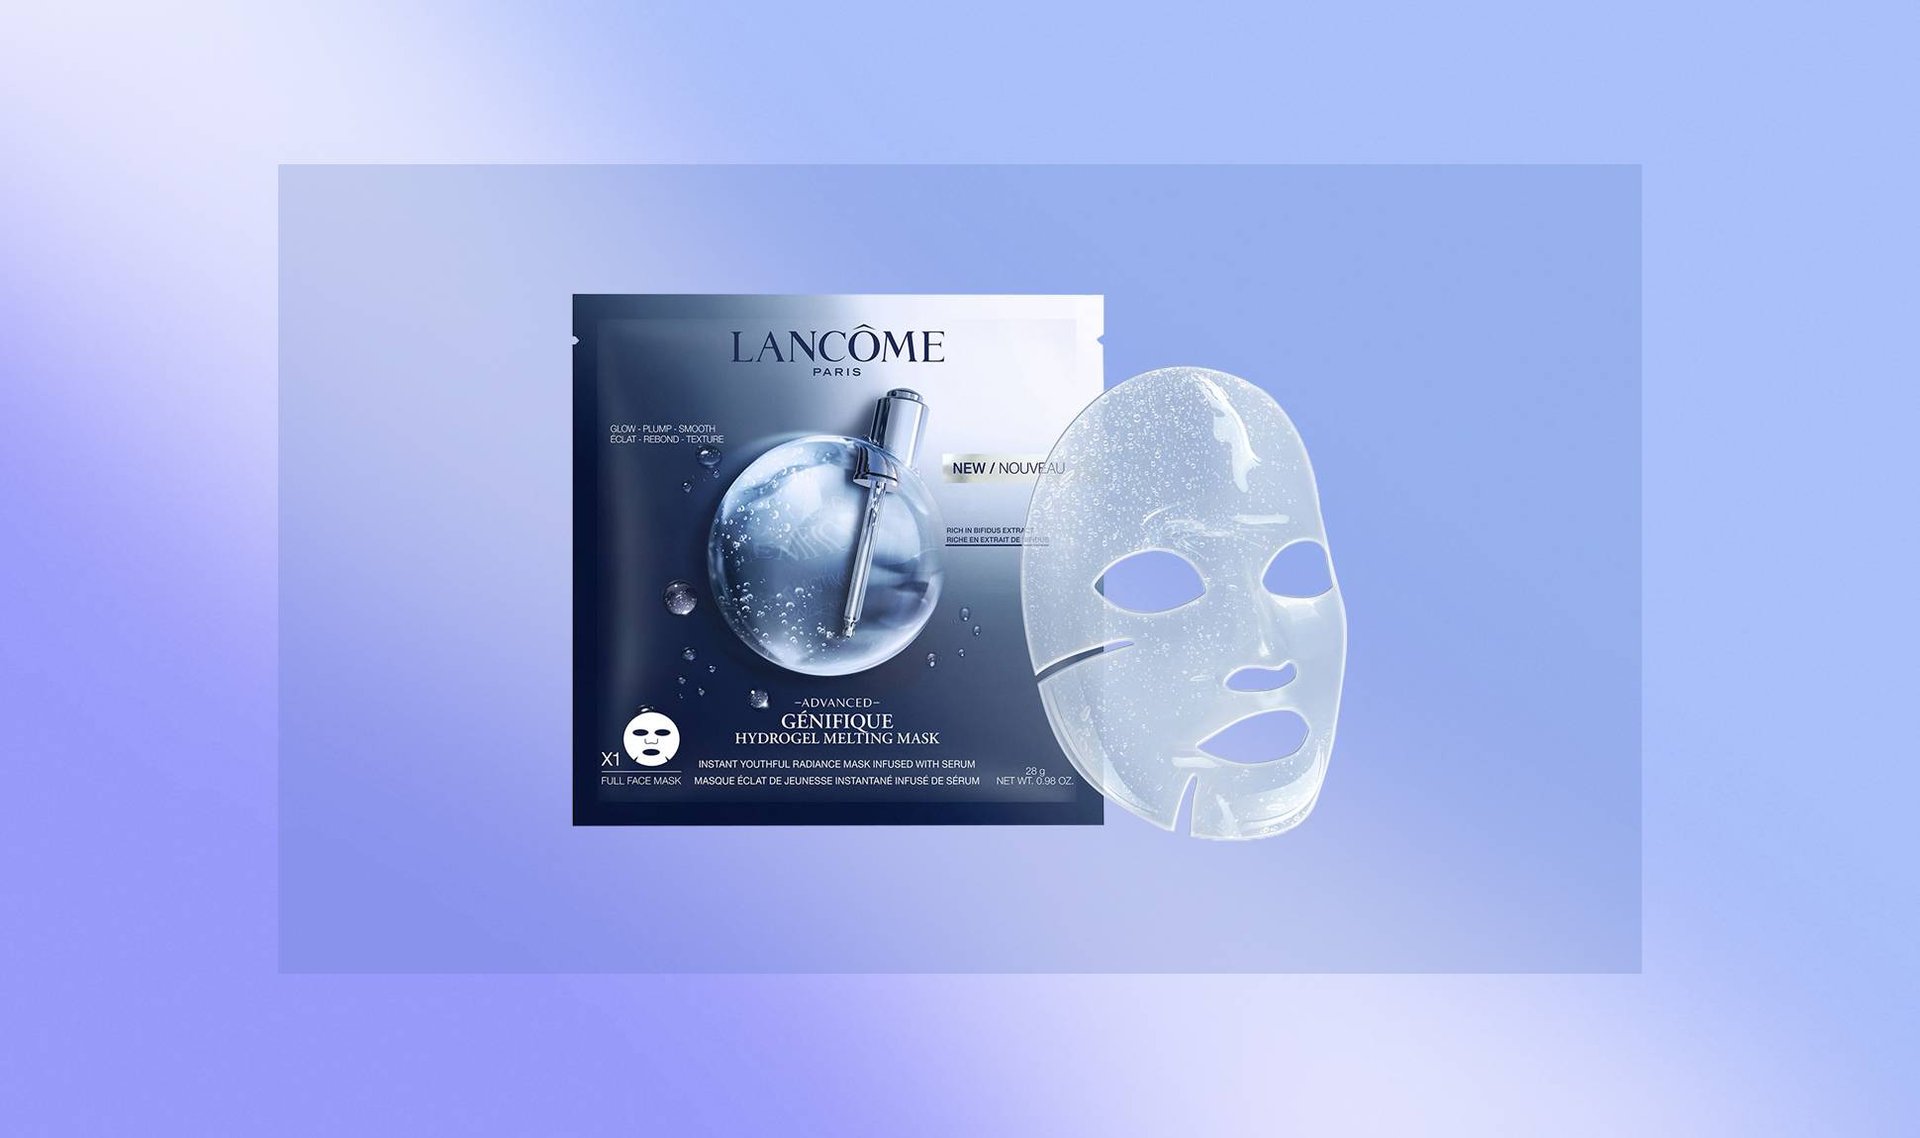 We Tried It: Lancôme Advanced Génifique Hydrogel Melting Sheet Mask